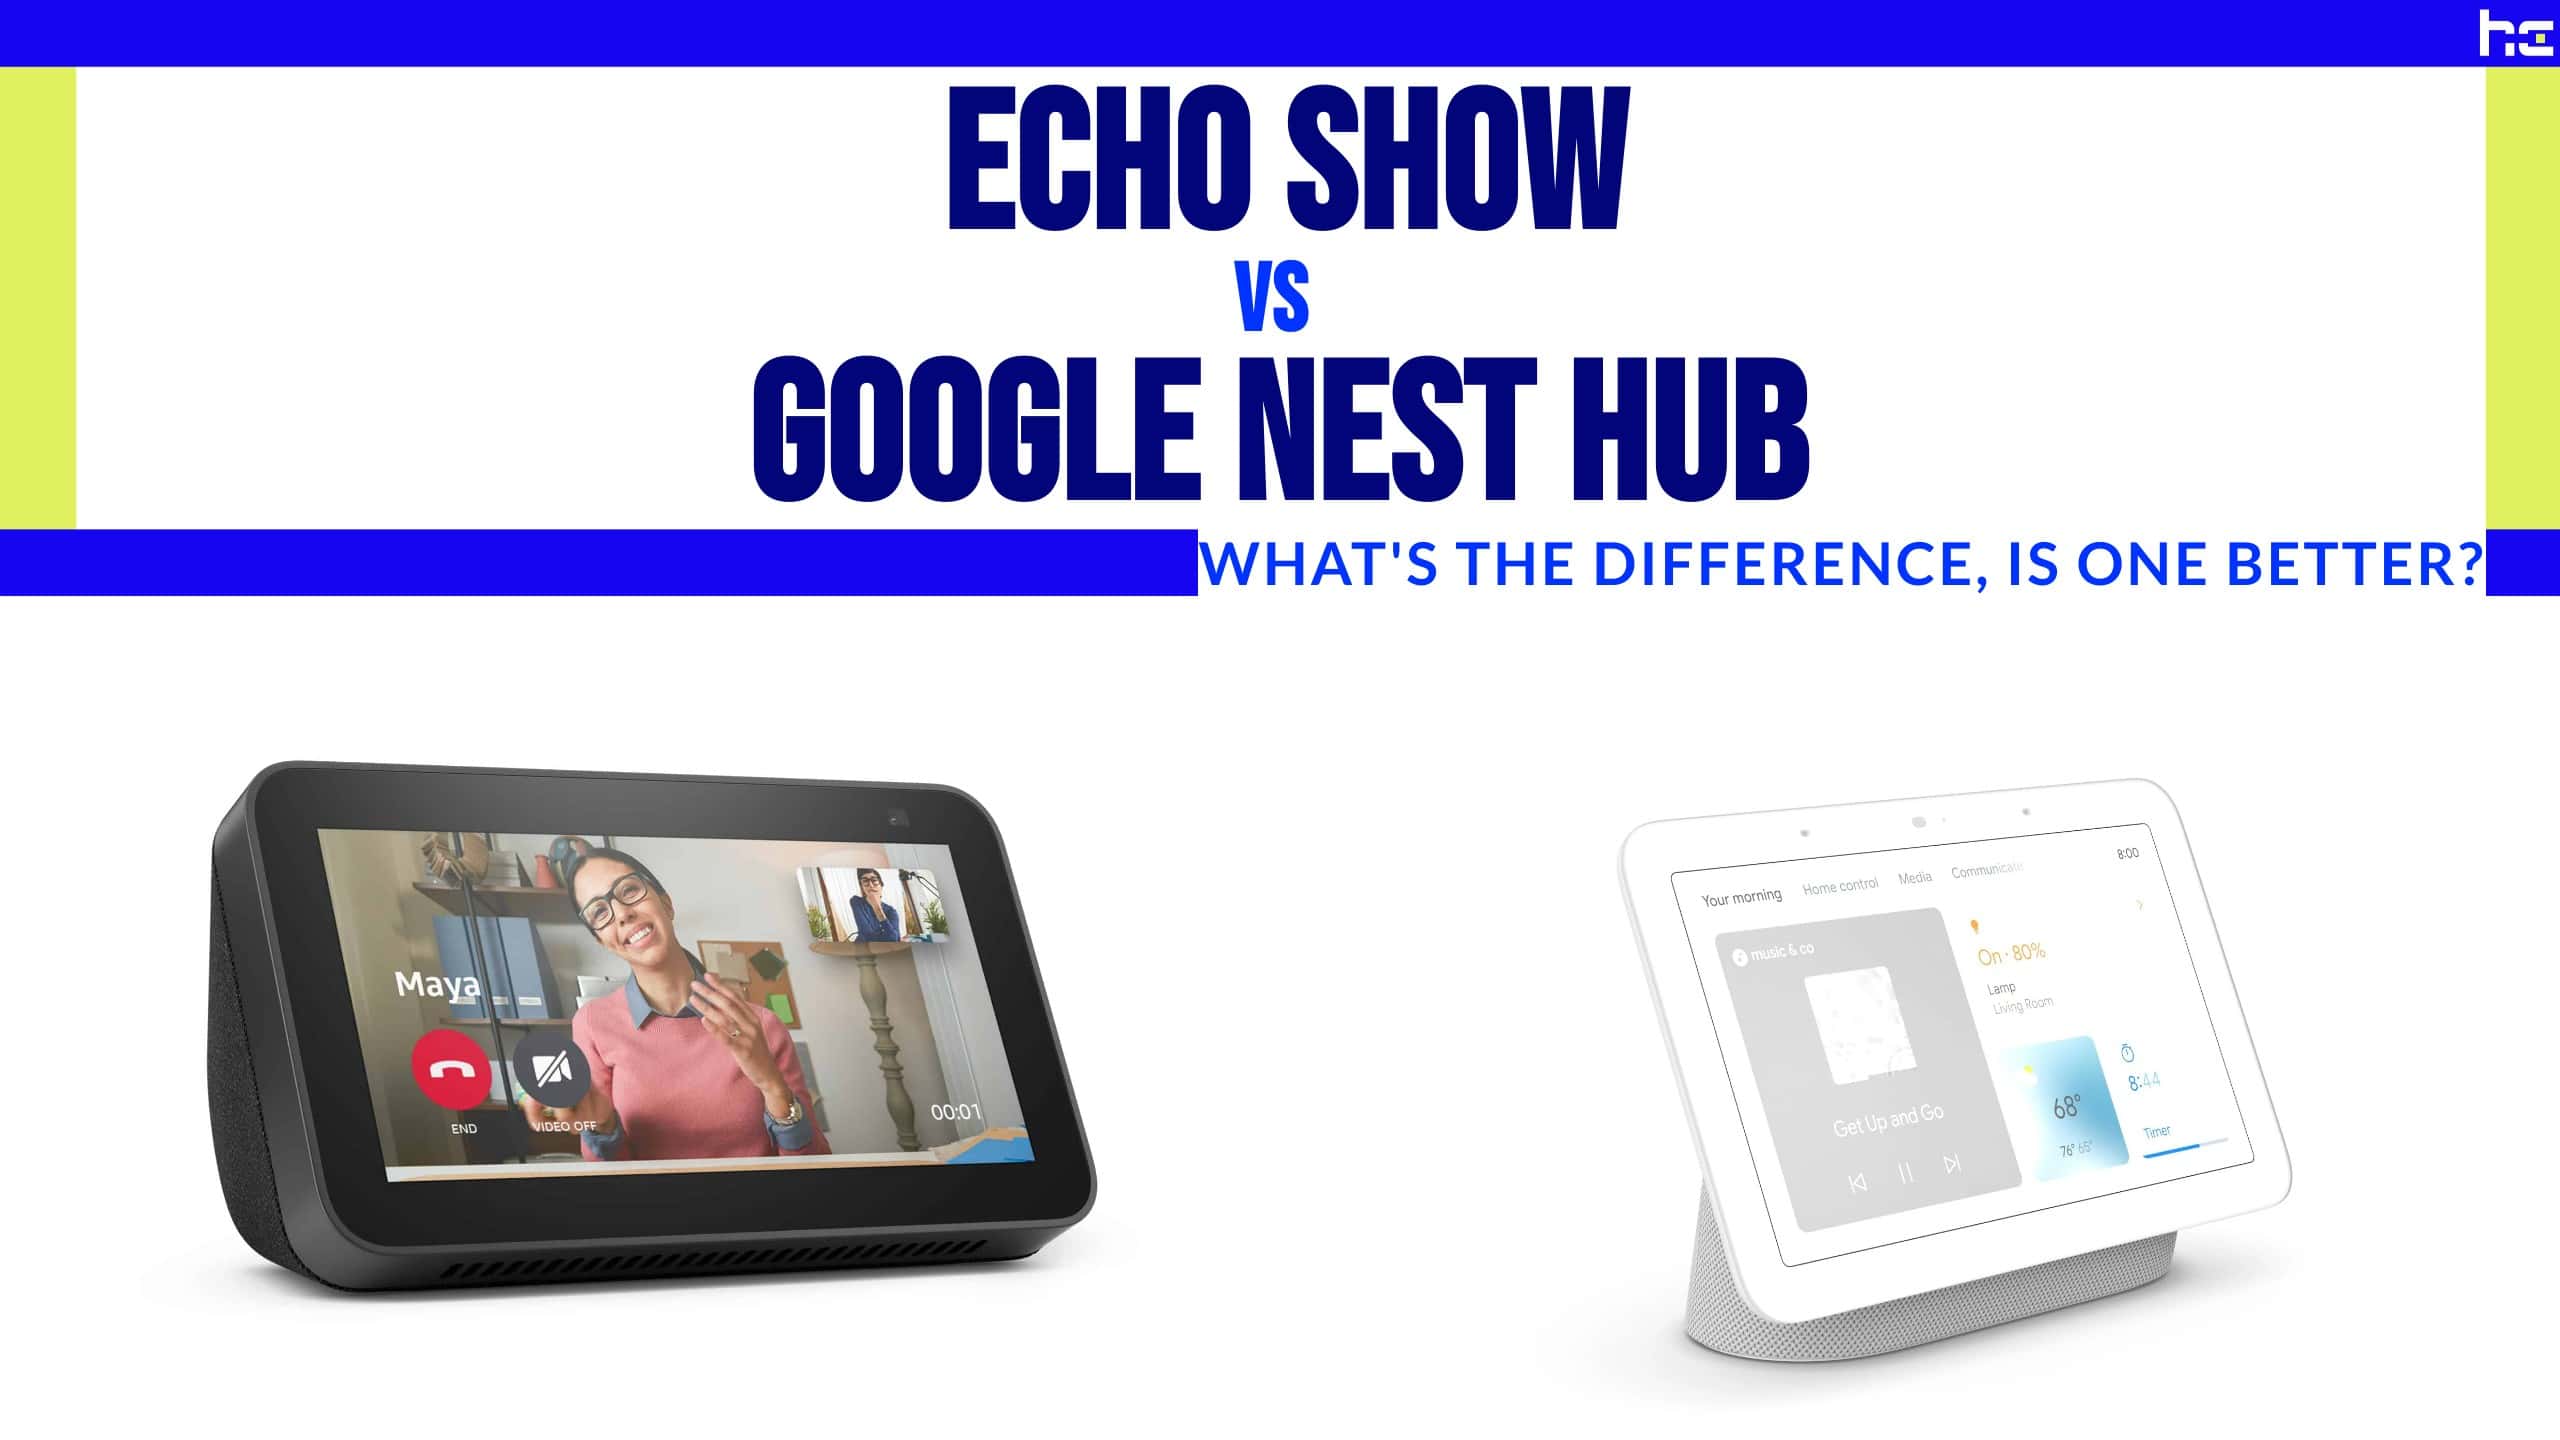 Echo Show vs Google Nest Hub featured image